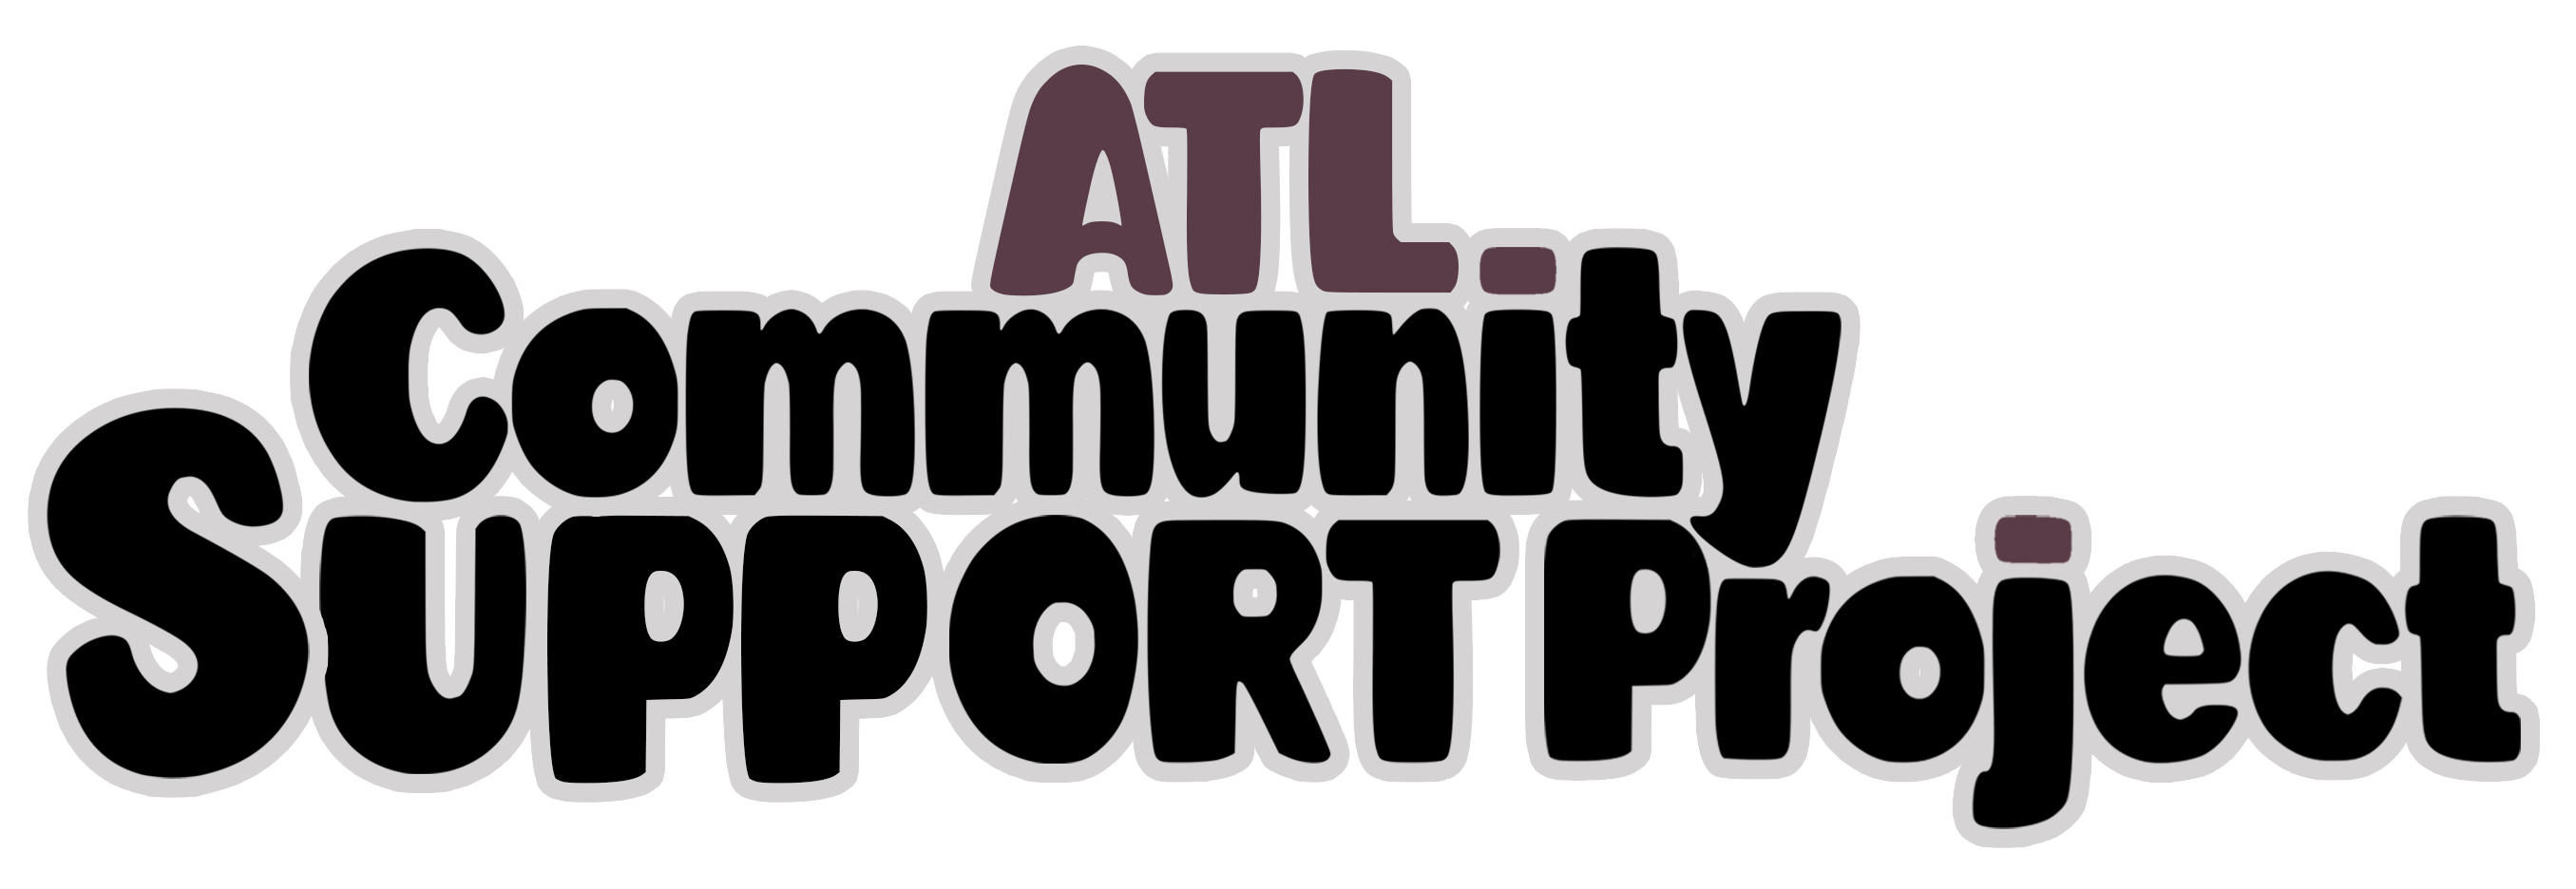  Atlanta Community Support Project